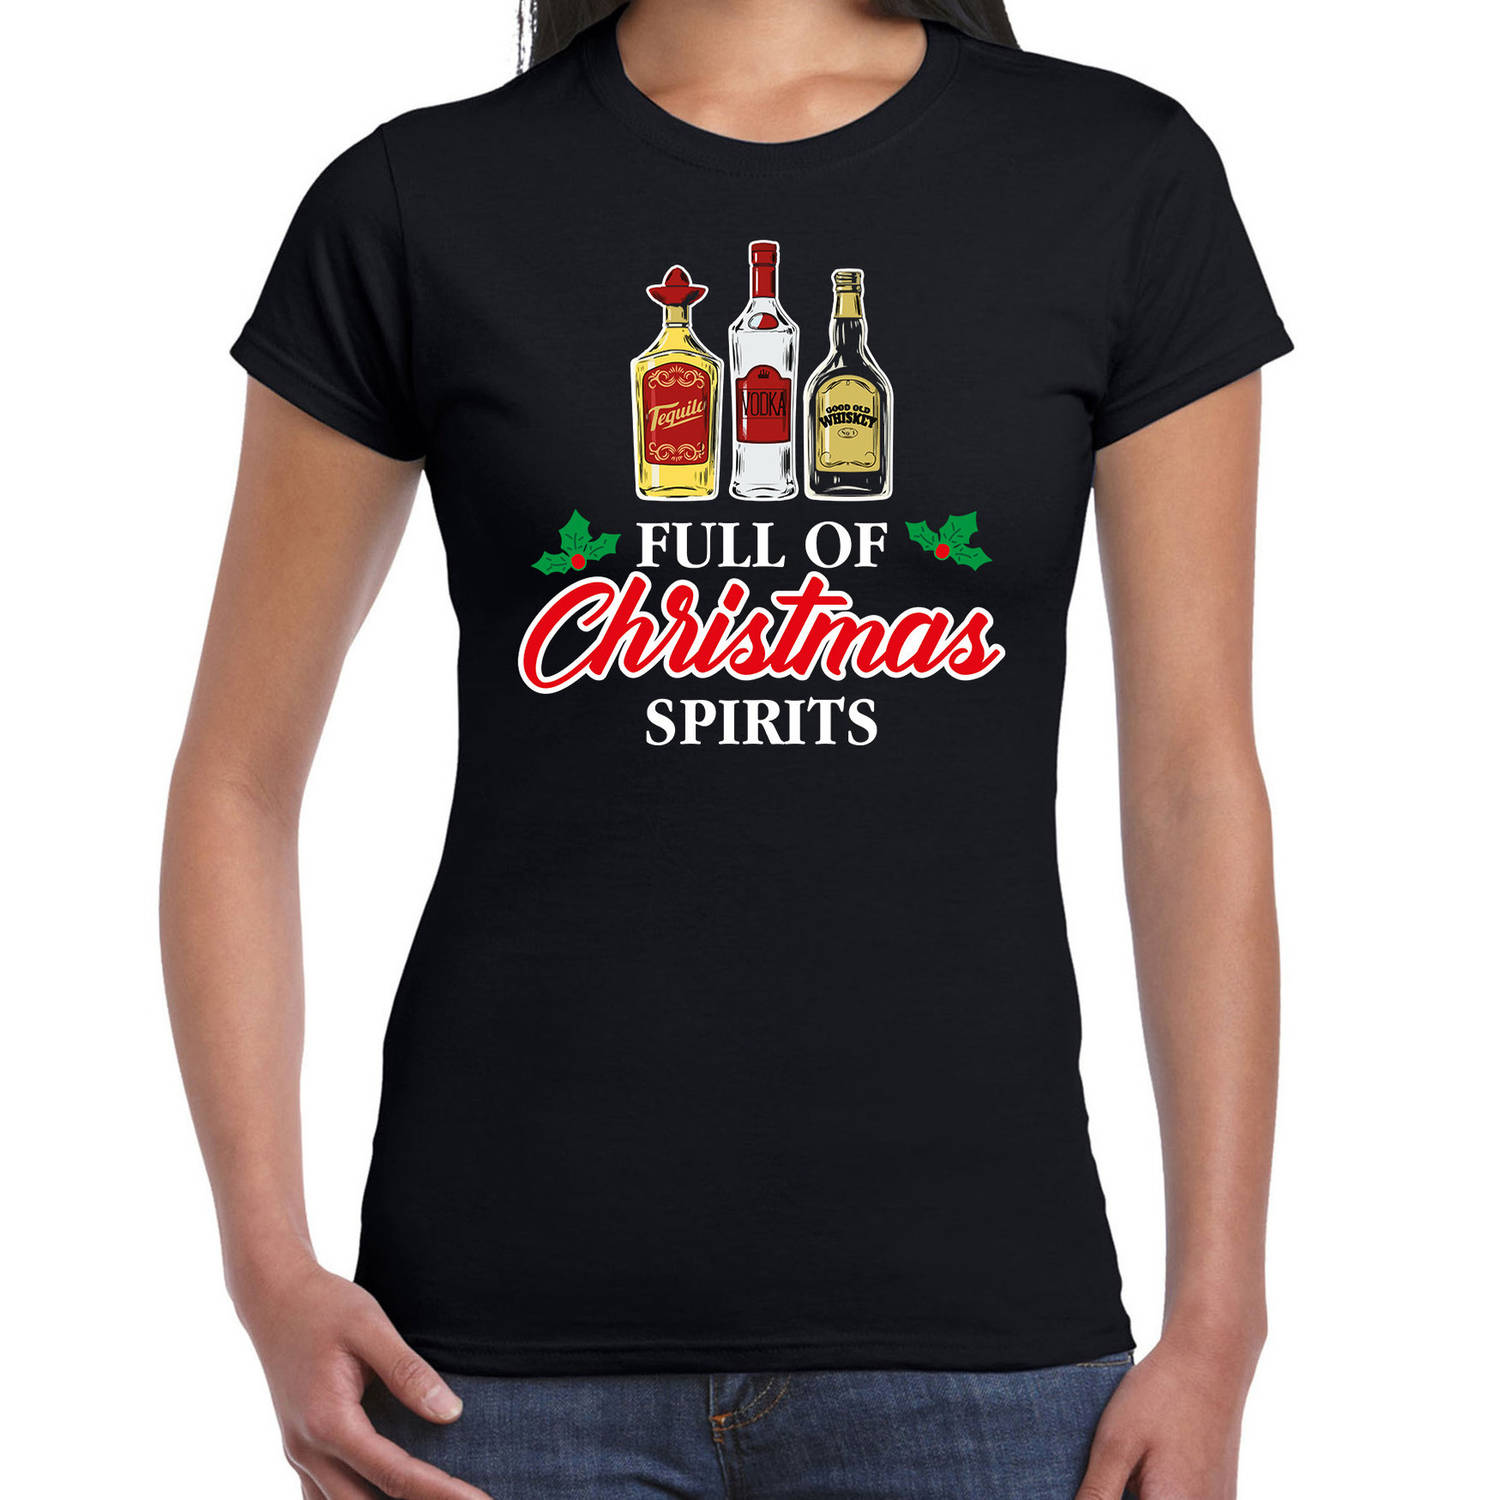 Foute drank humor Kerst T-shirt voor dames zwart L - kerst t-shirts